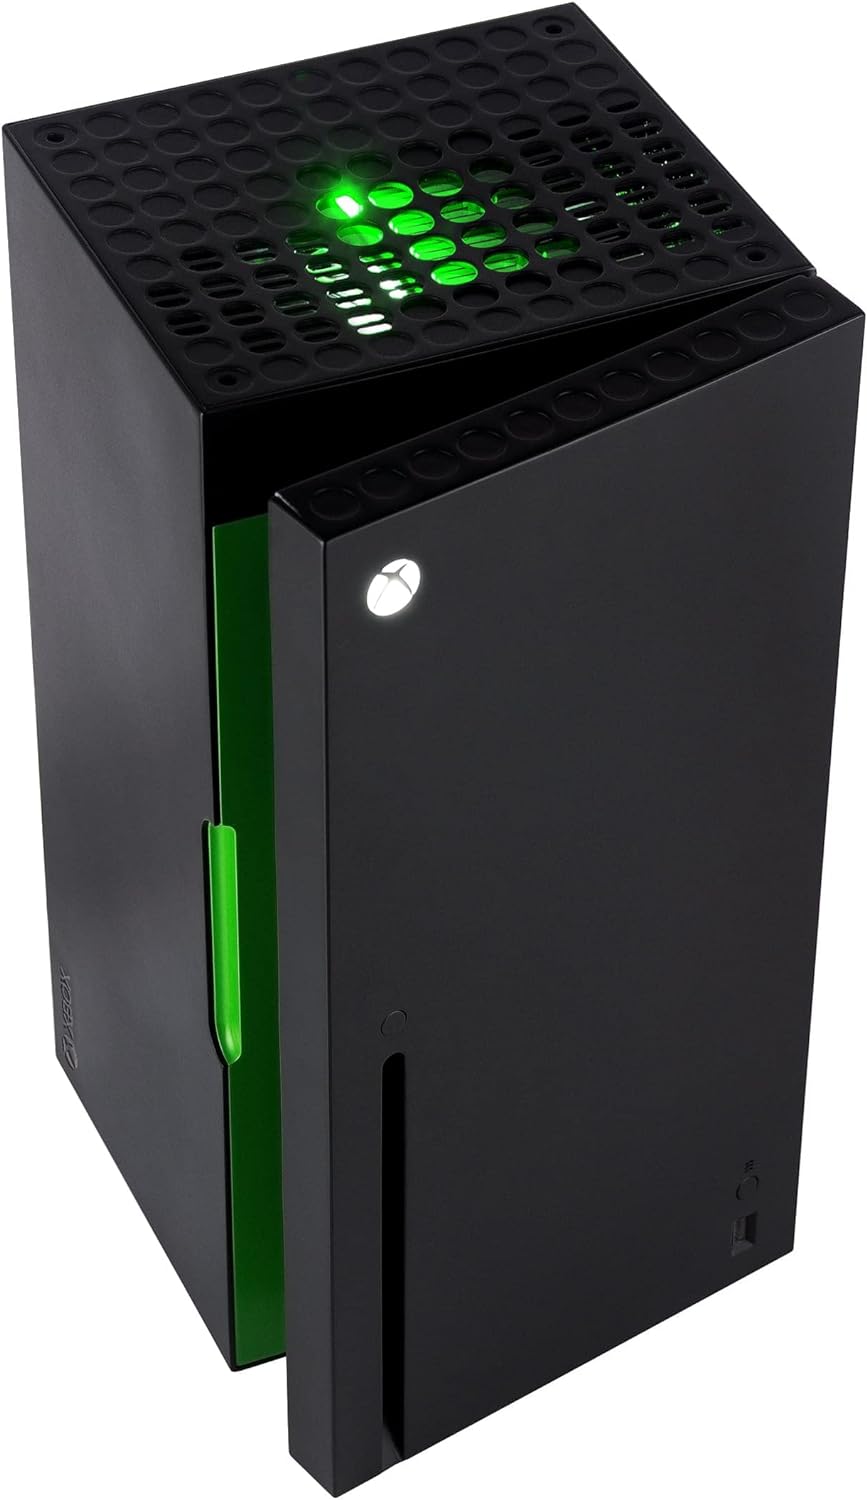 Ukonic Xbox Series X Mini Frigo Termoelettrico, 10 lt